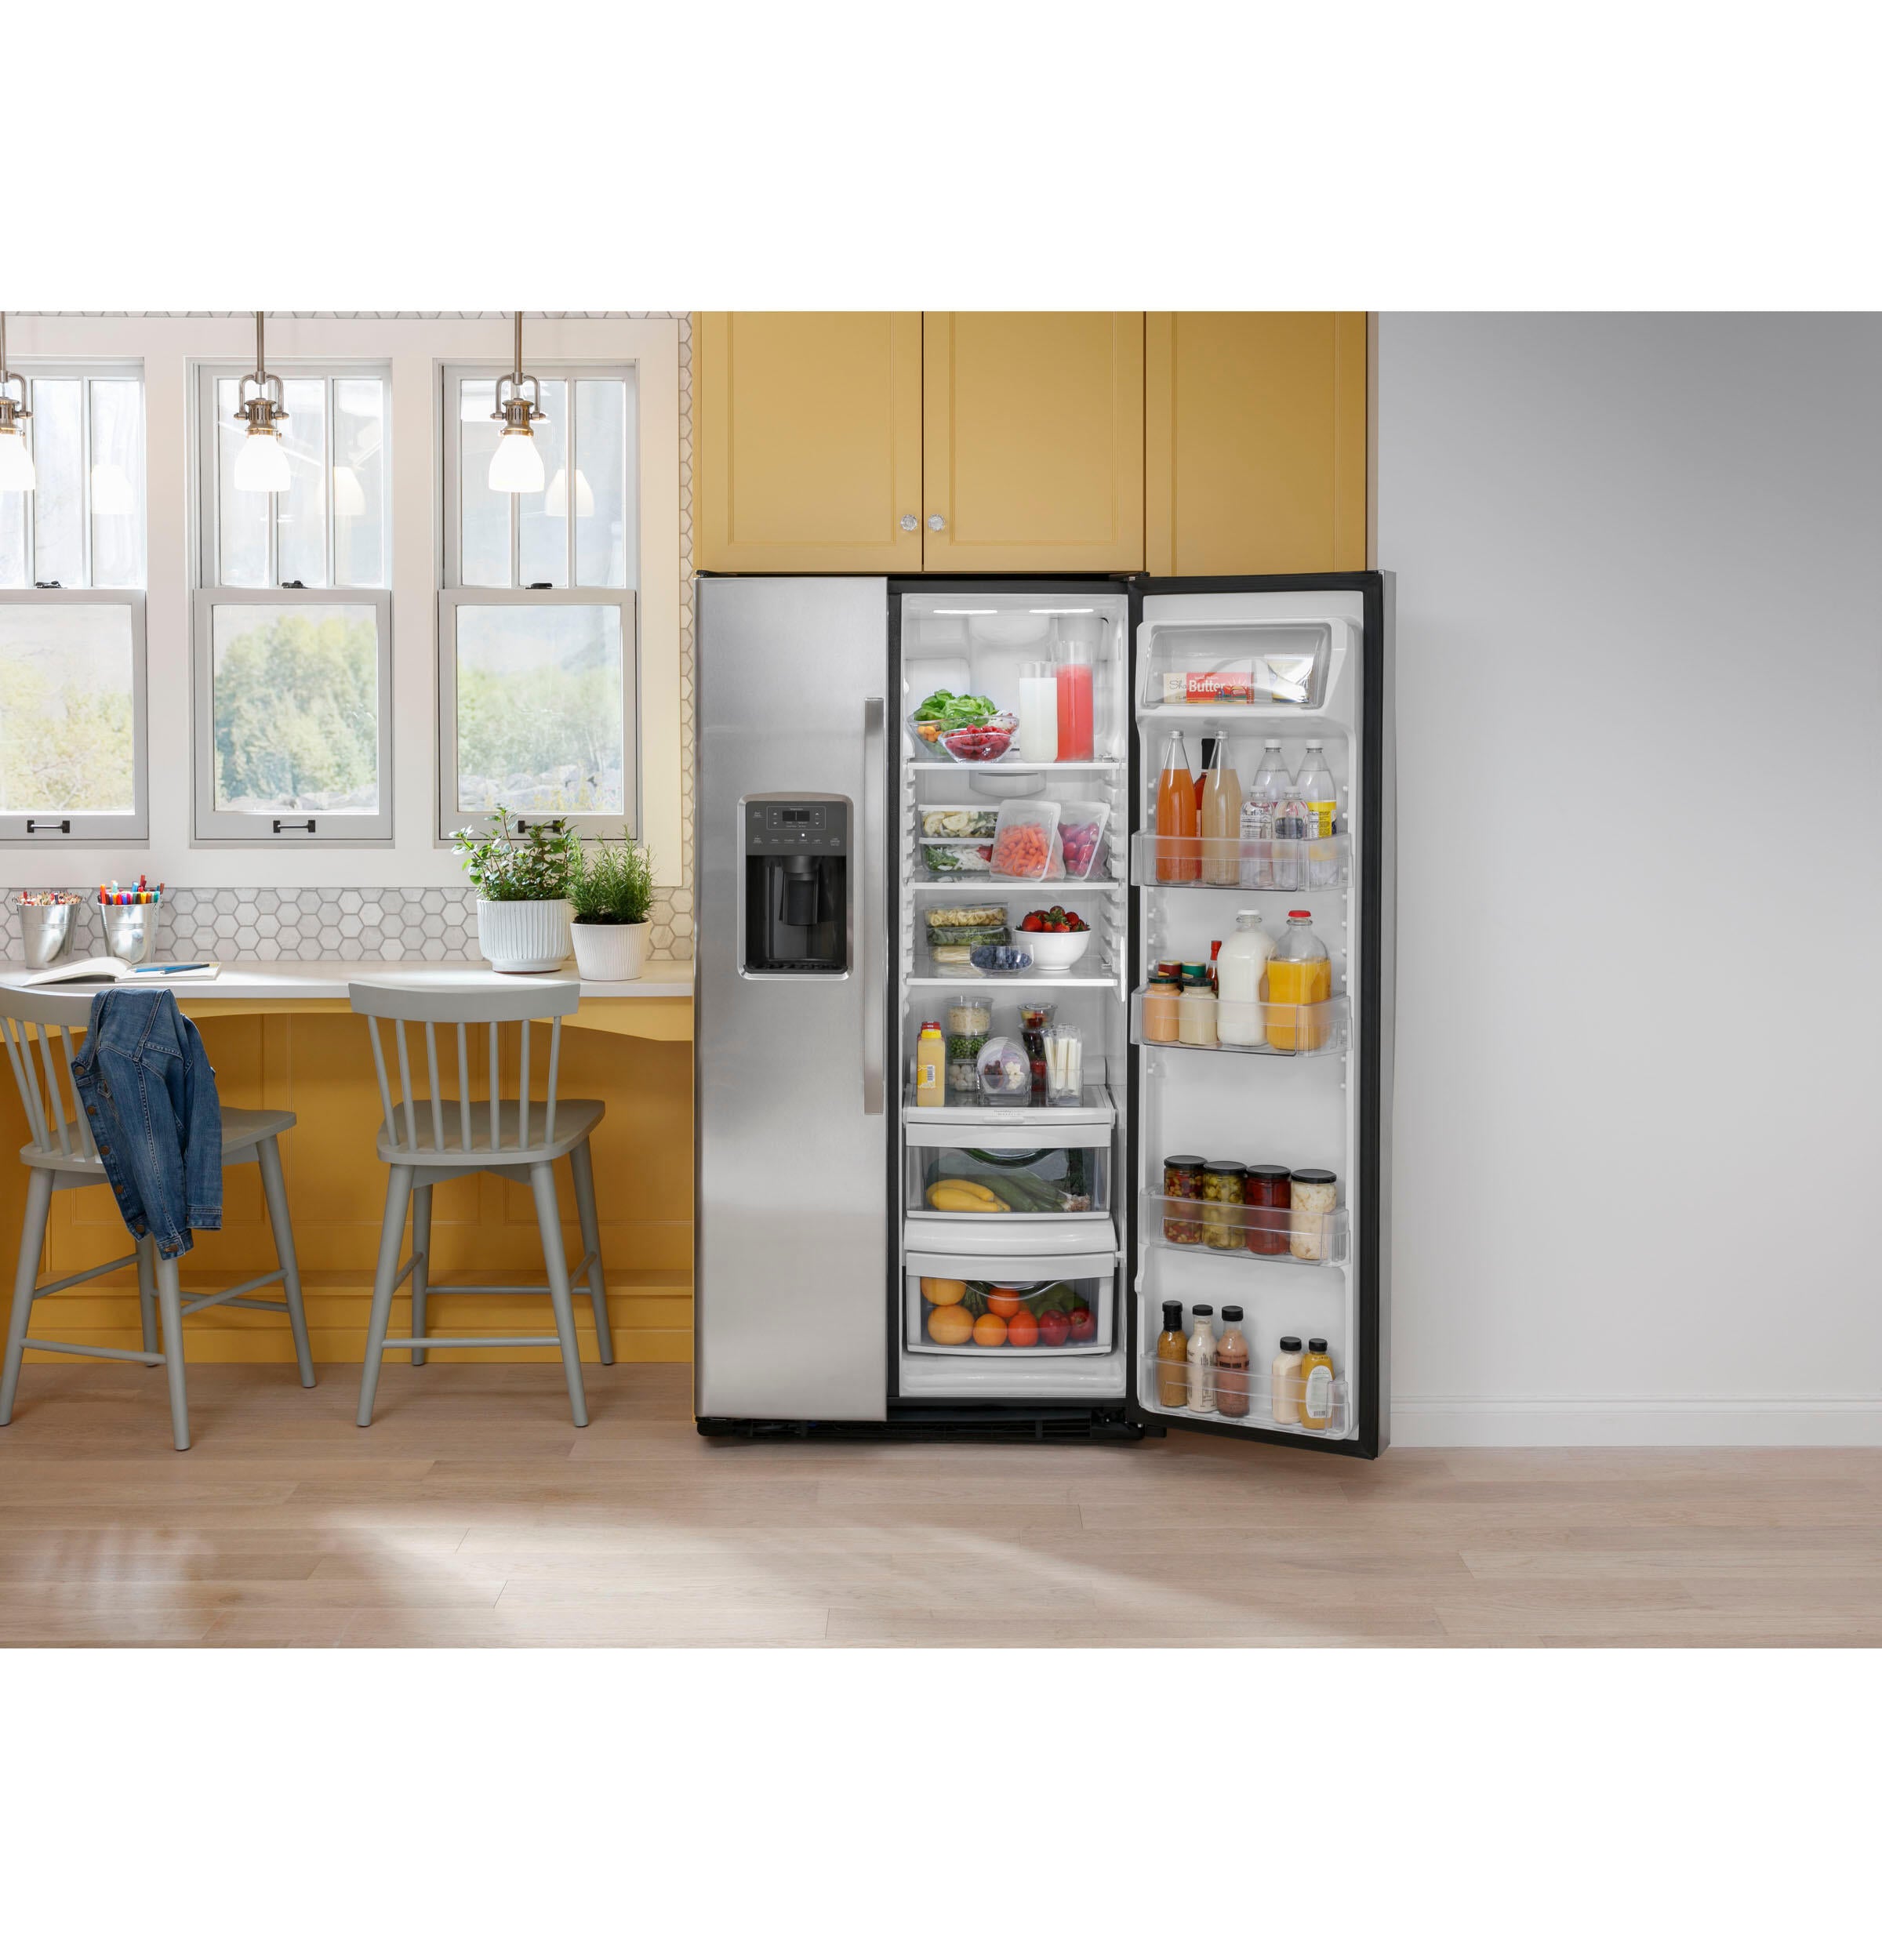 Ge Appliances GSE25GGPBB Ge® Energy Star® 25.3 Cu. Ft. Side-By-Side Refrigerator